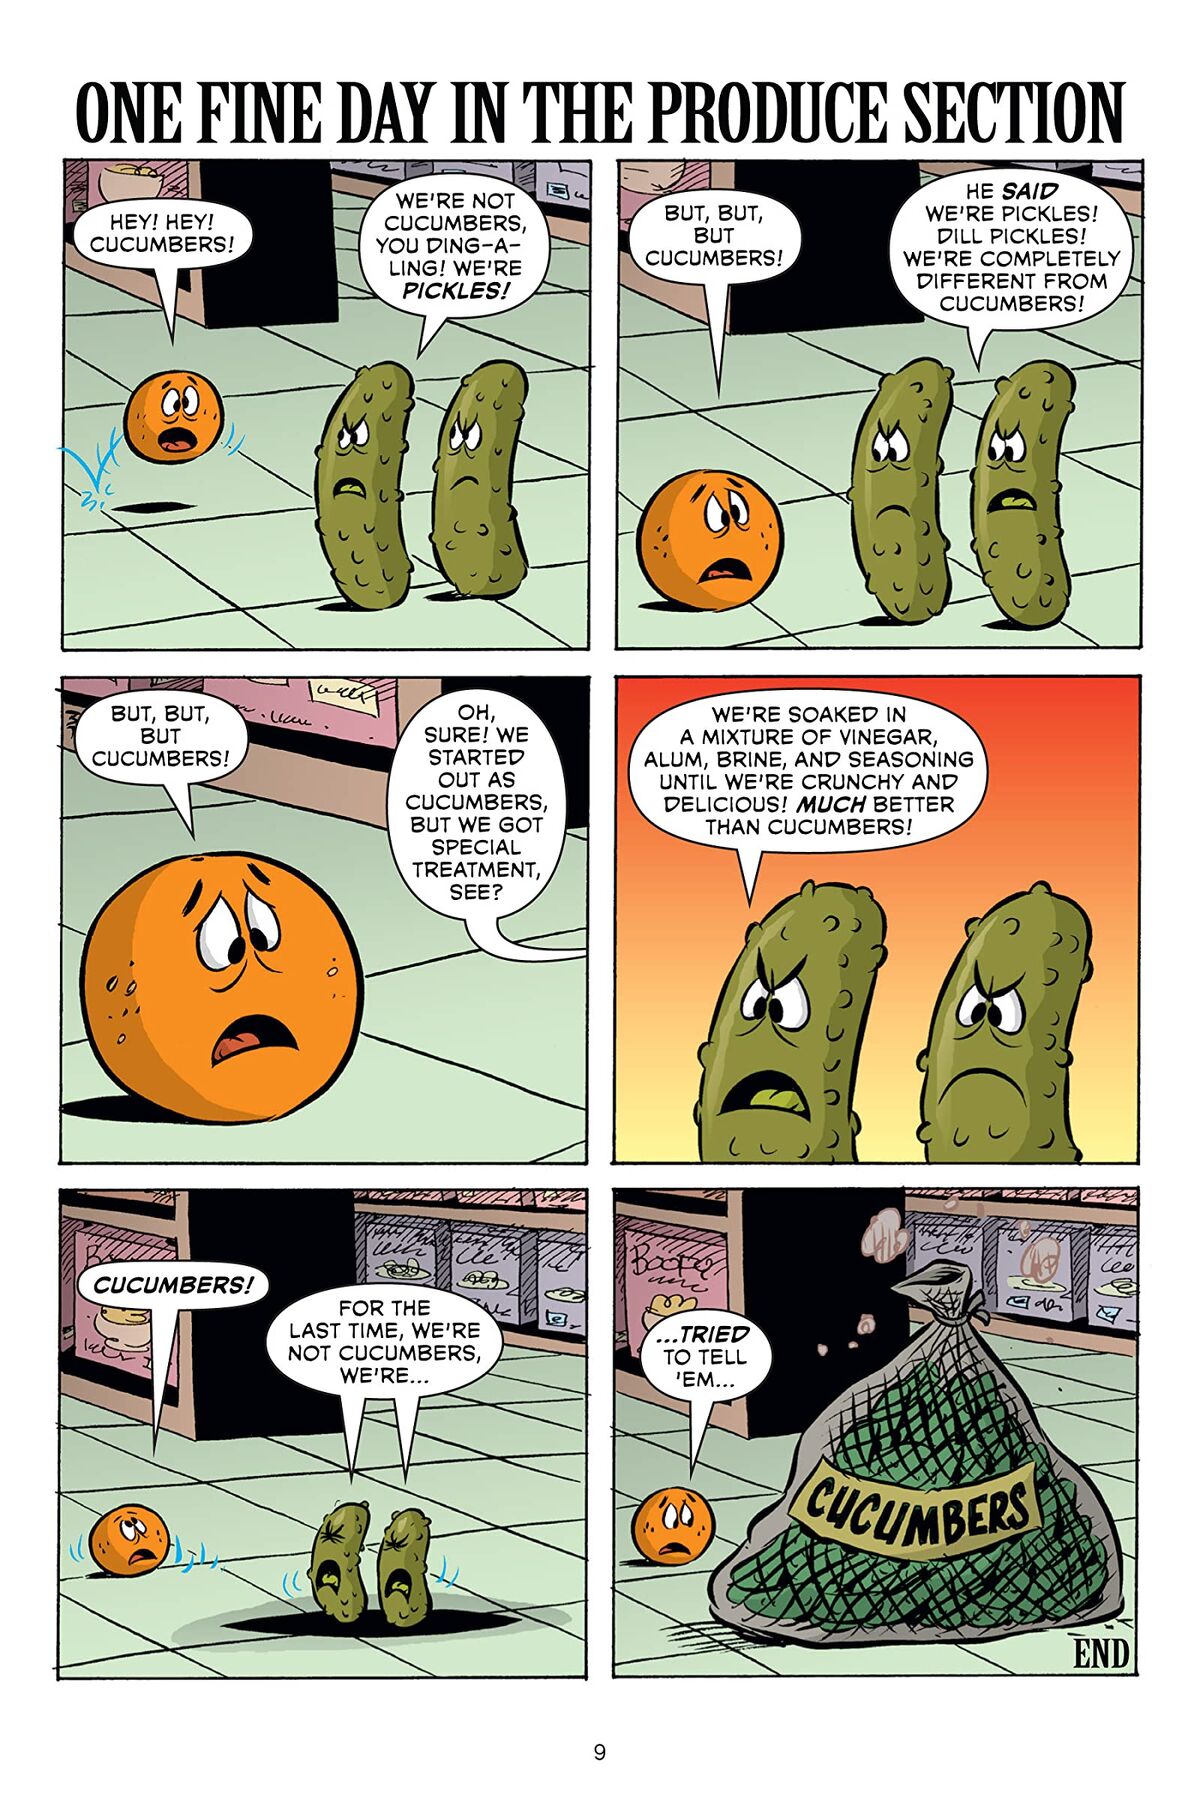 Pickles (comic strip) - Wikipedia